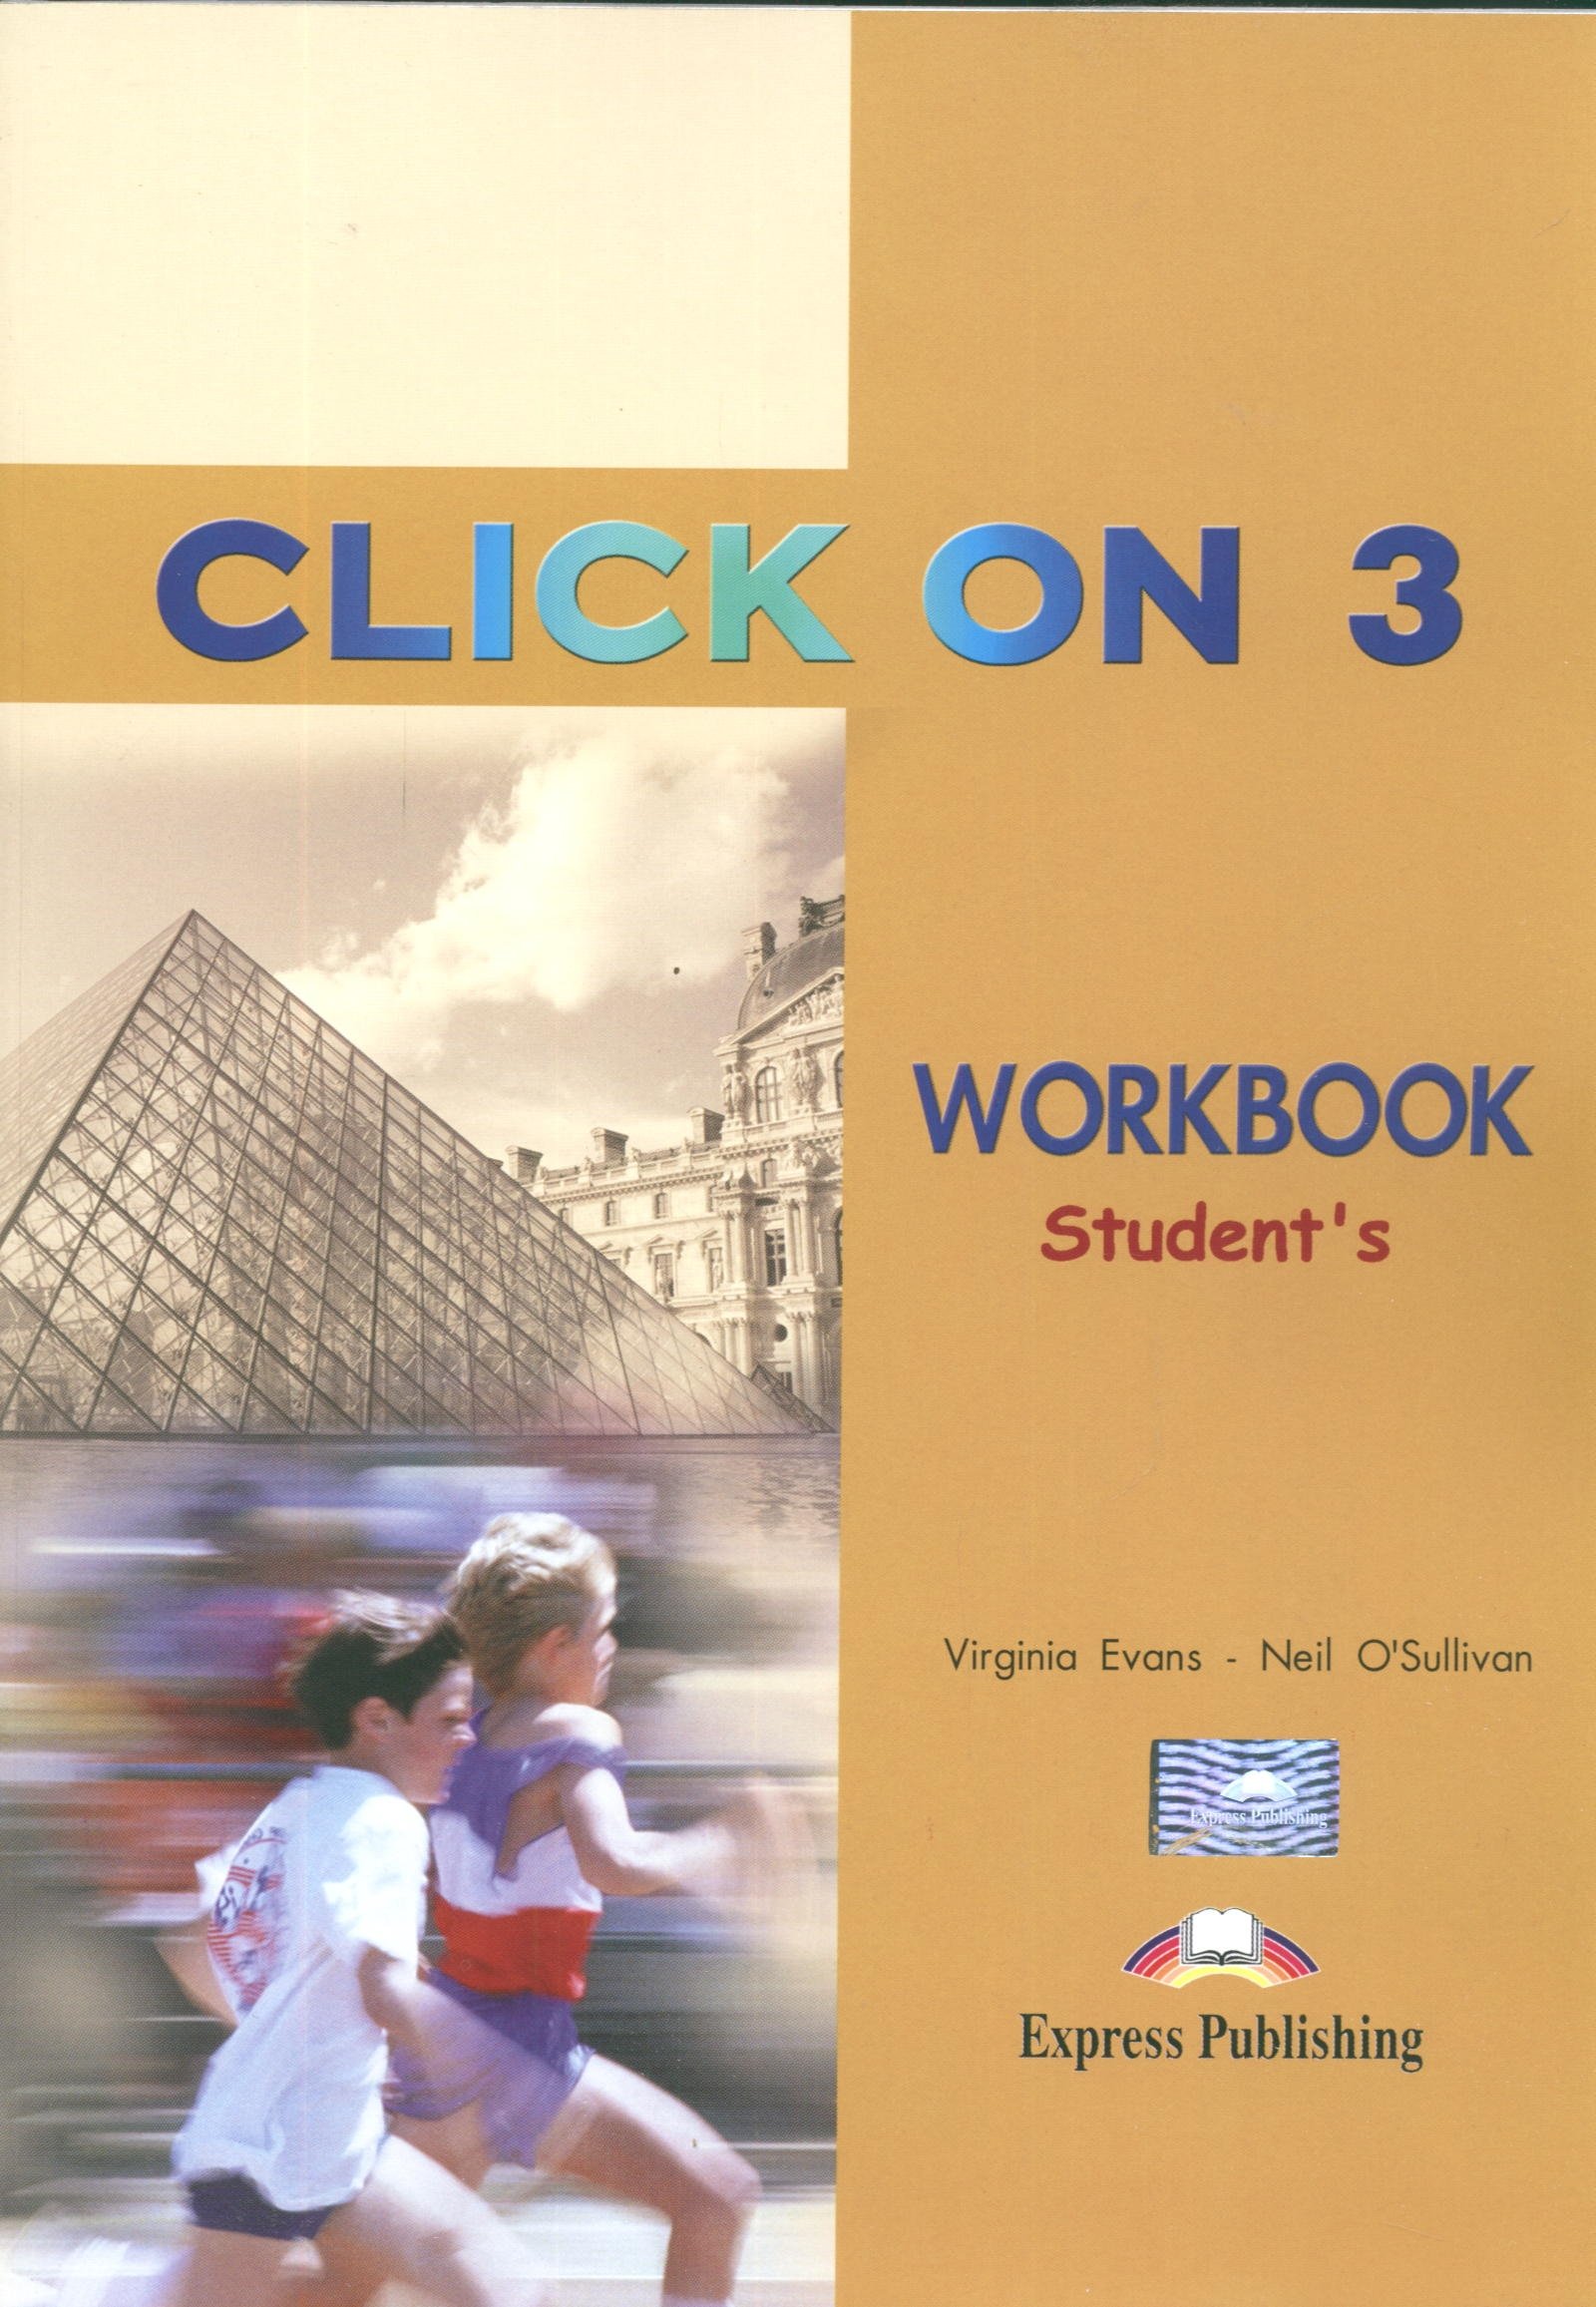 CLICK ON 3 Workbook (Student's)